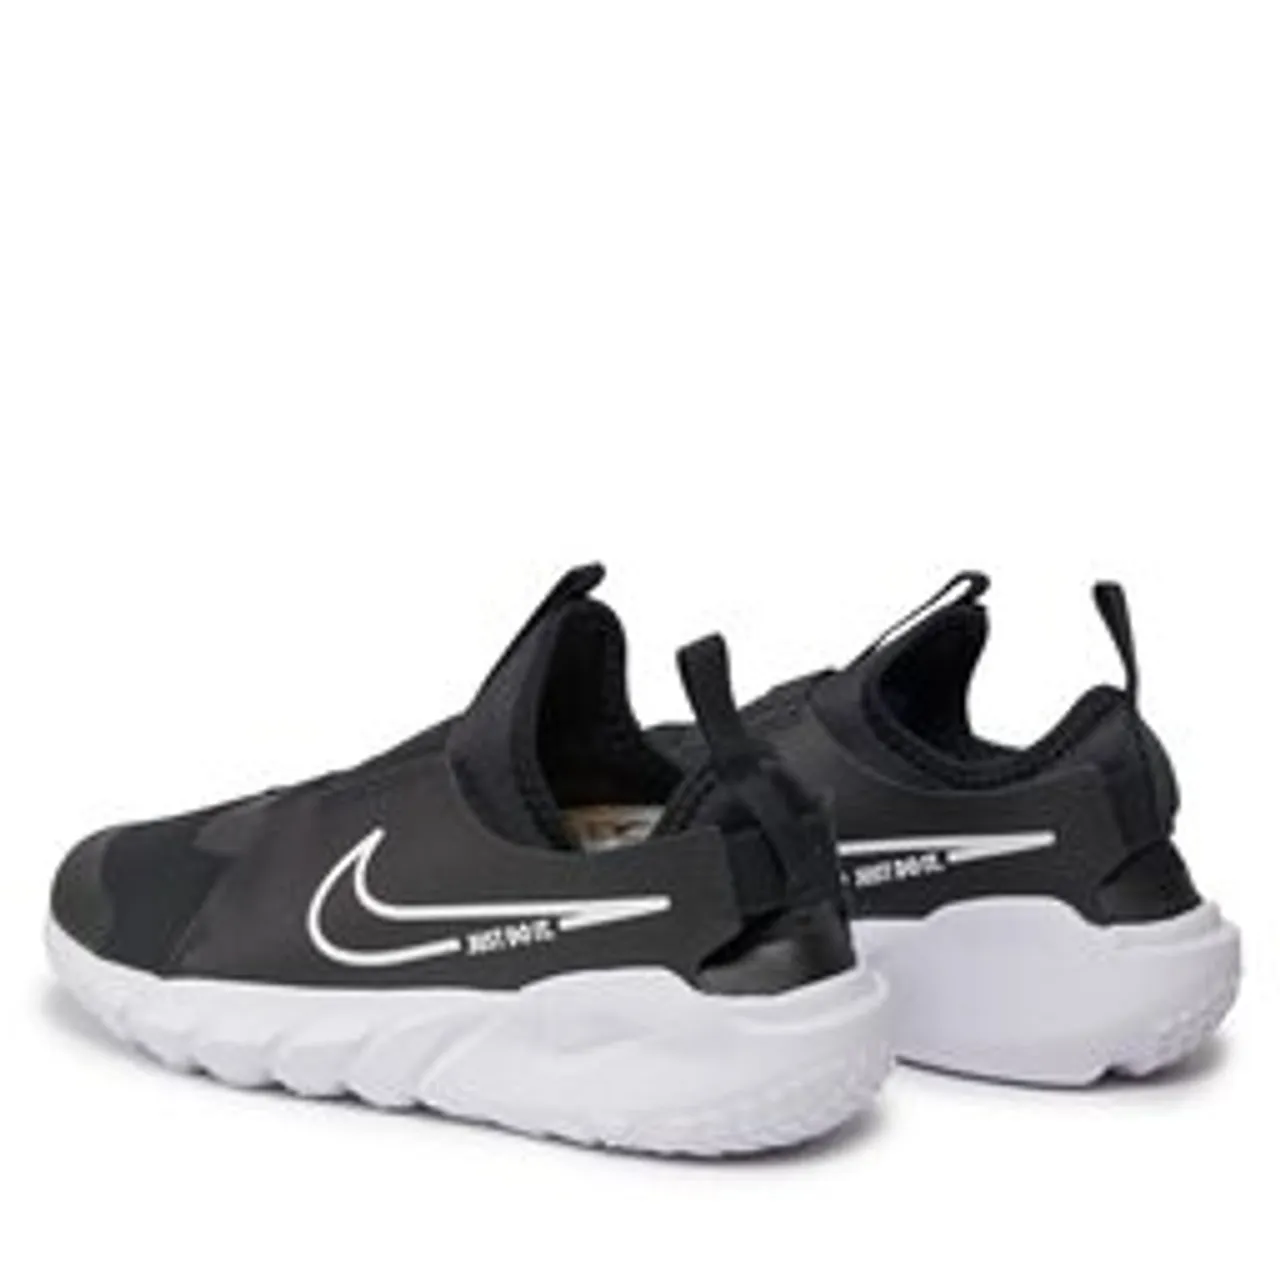 Schuhe Nike Flex Runner 2 (Gs) DJ6038 002 Black/White/Photo Blue